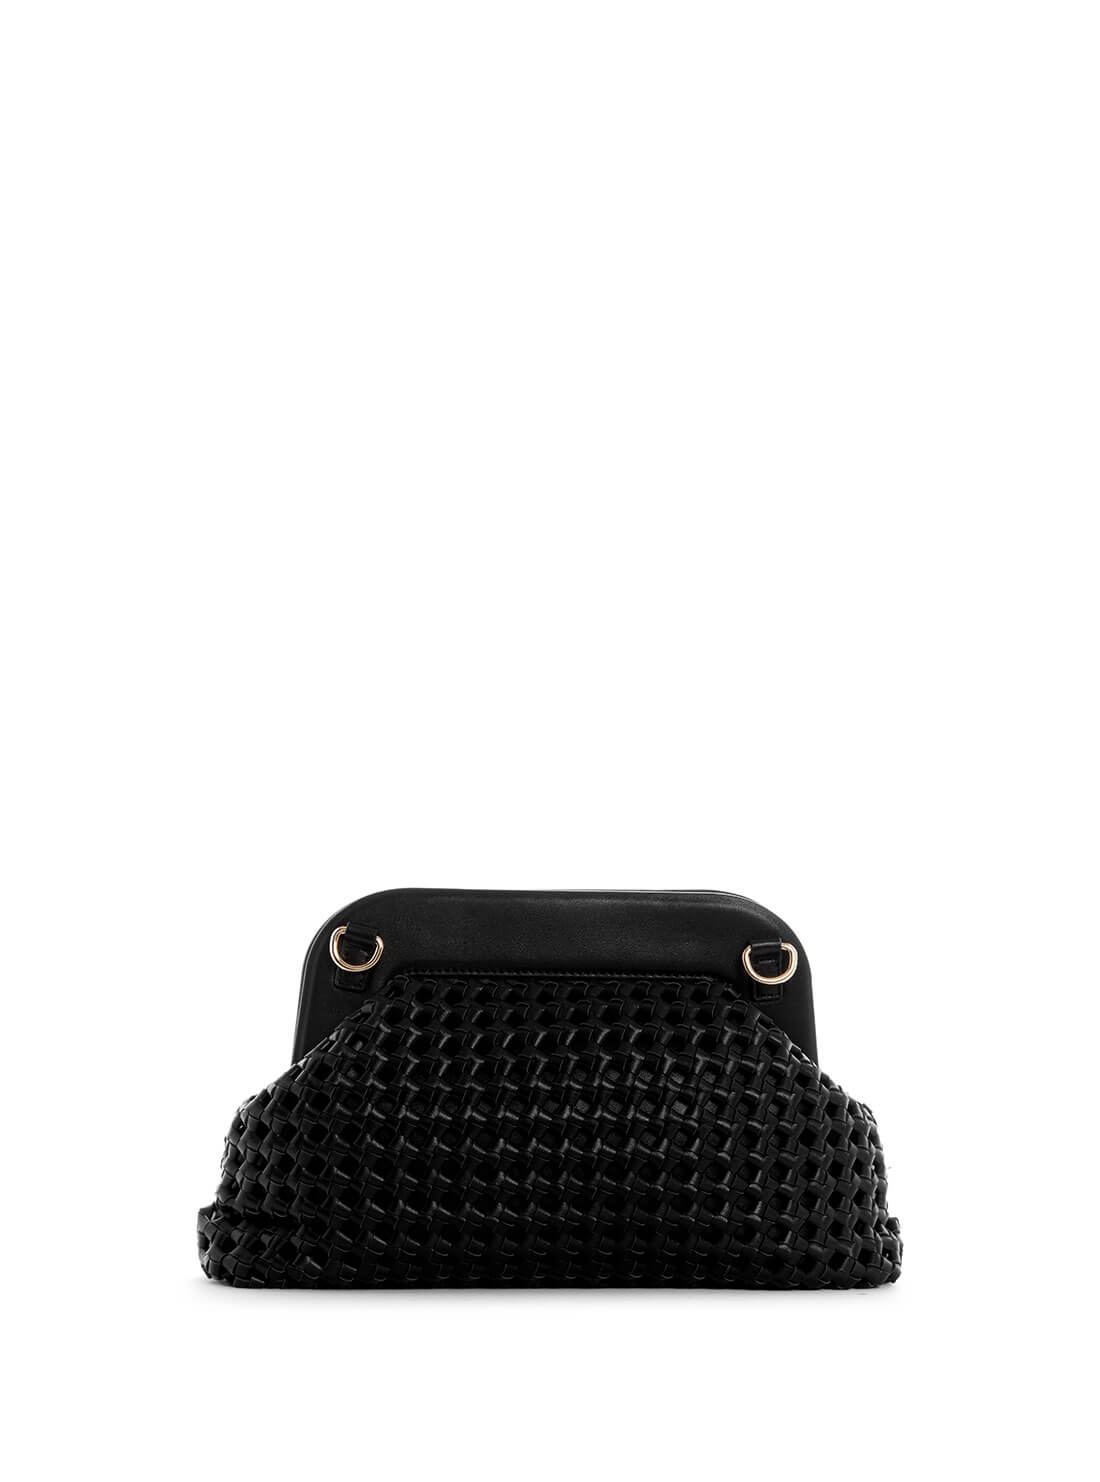 GUESS Womens Black Sicilia Frame Clutch Crossbody Bag WG849017 Back View